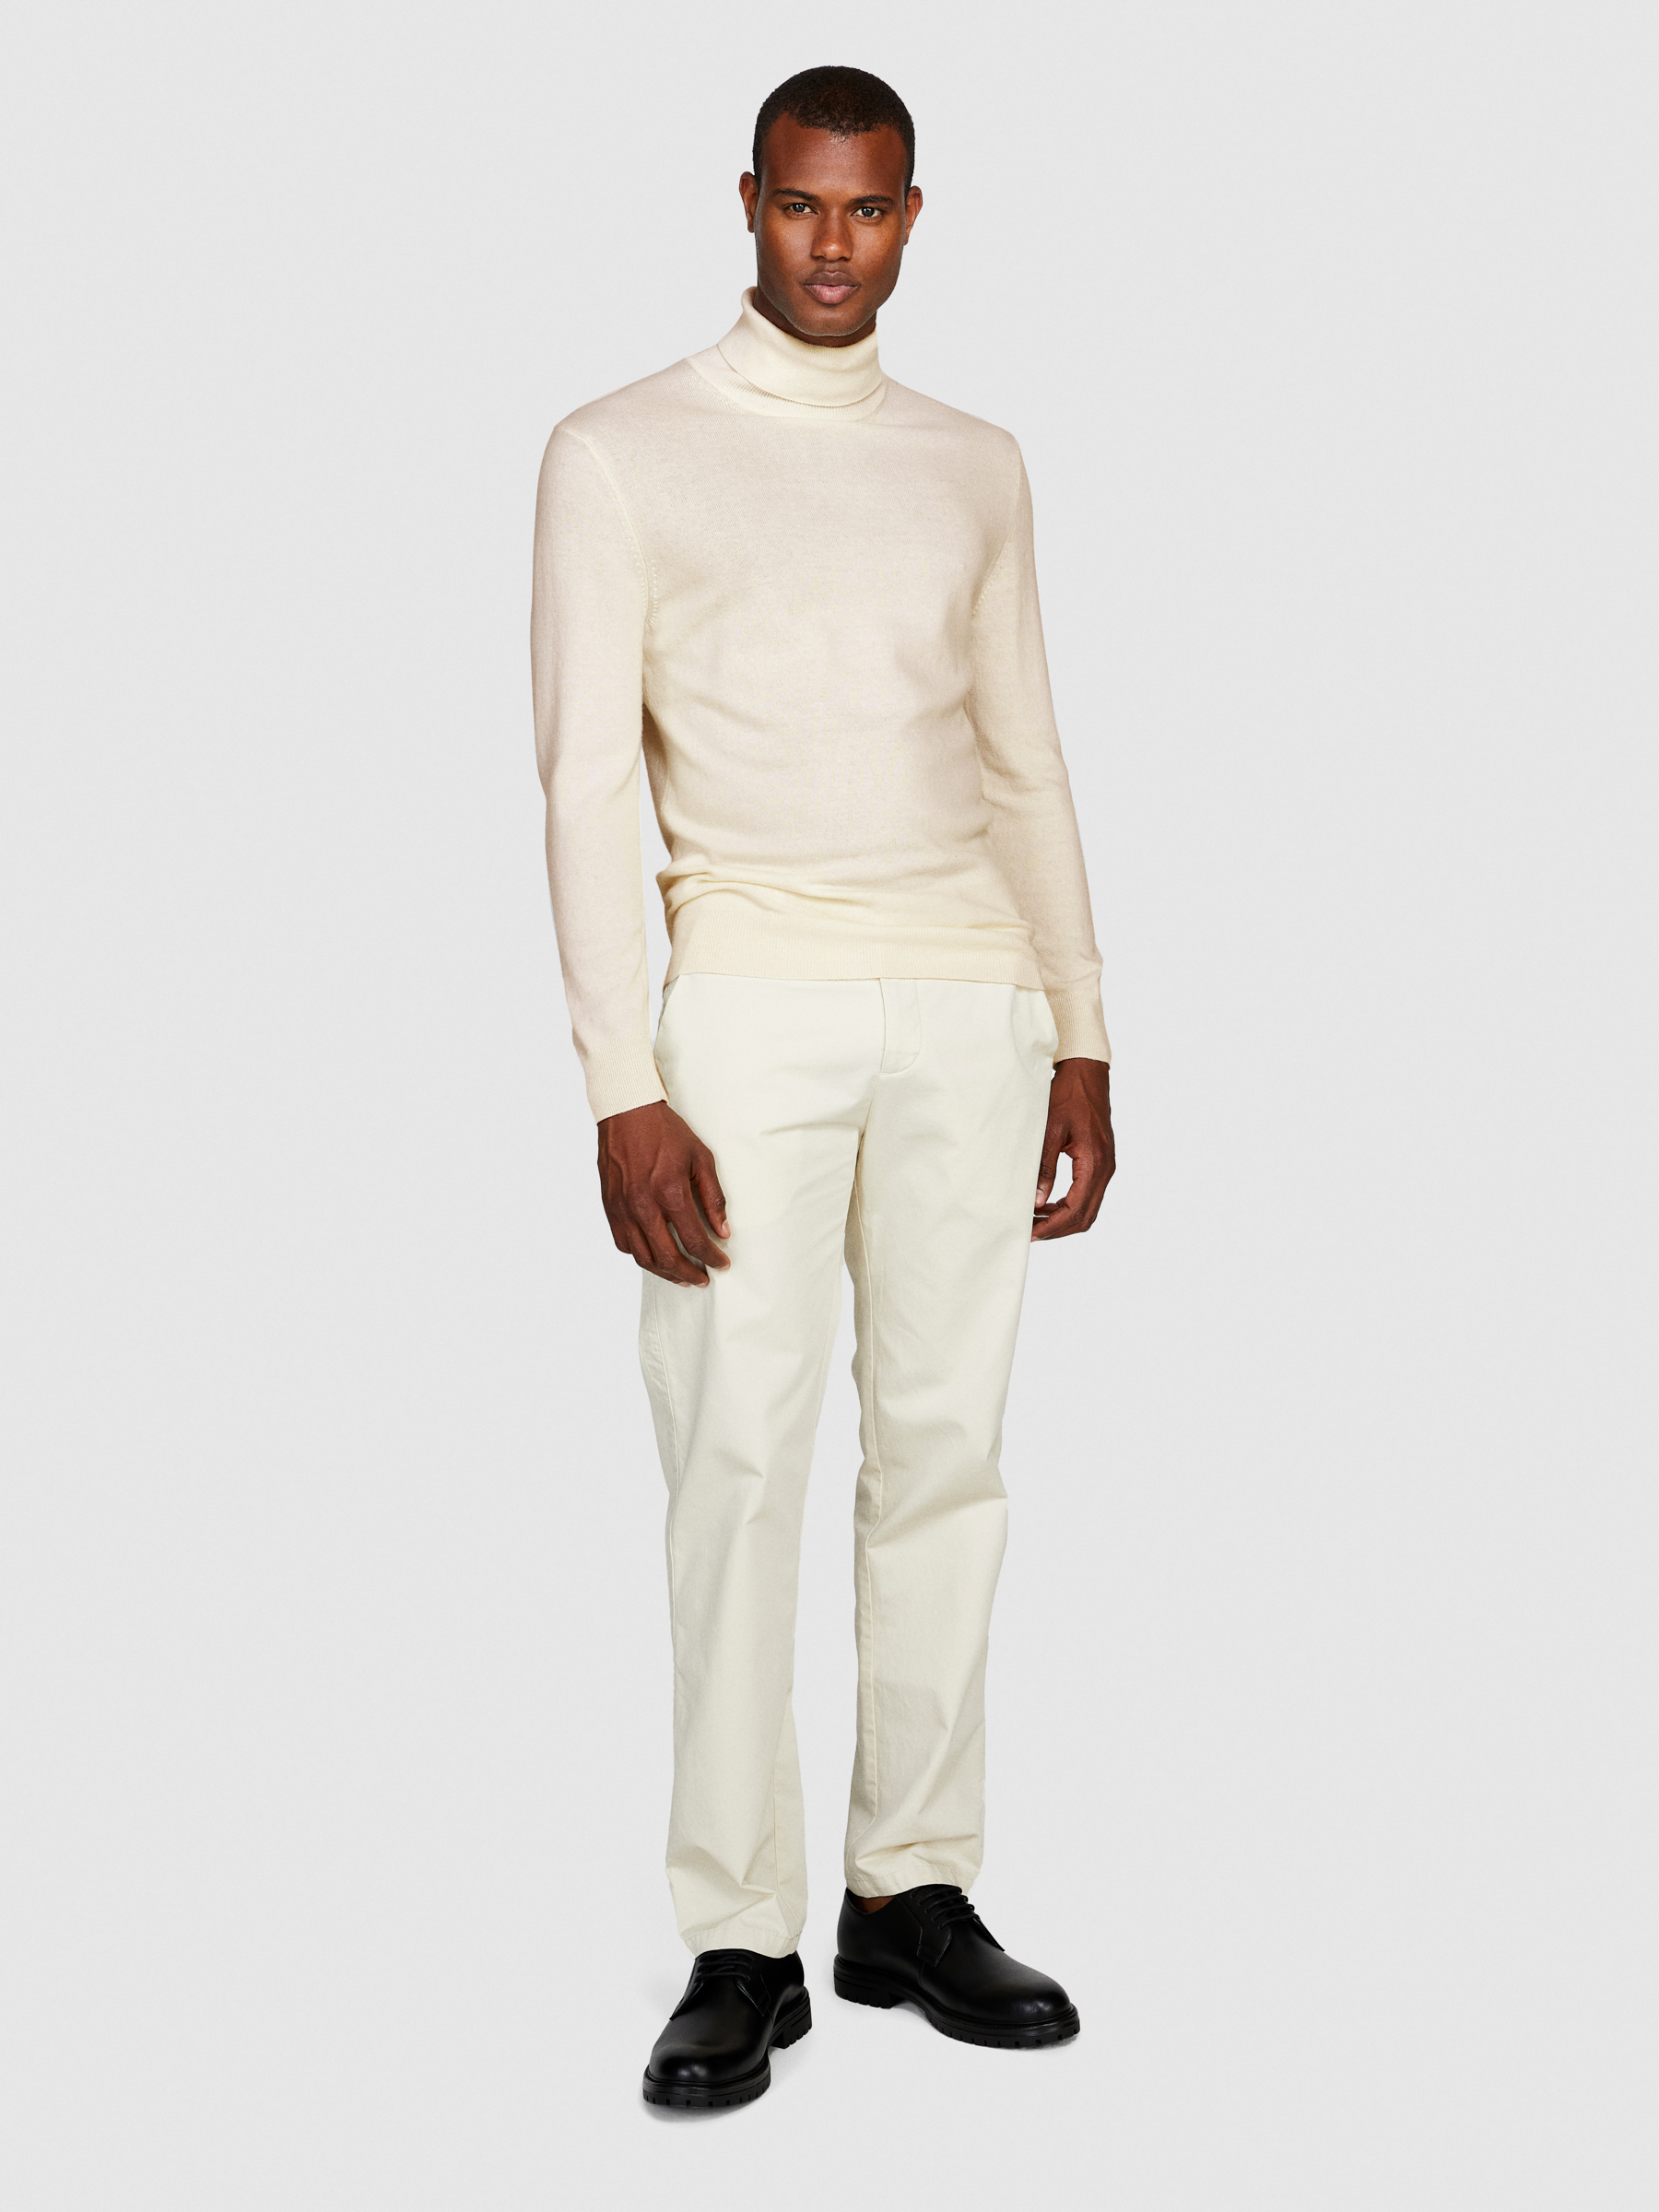 Sisley - High Neck Sweater, Man, Creamy White, Size: L